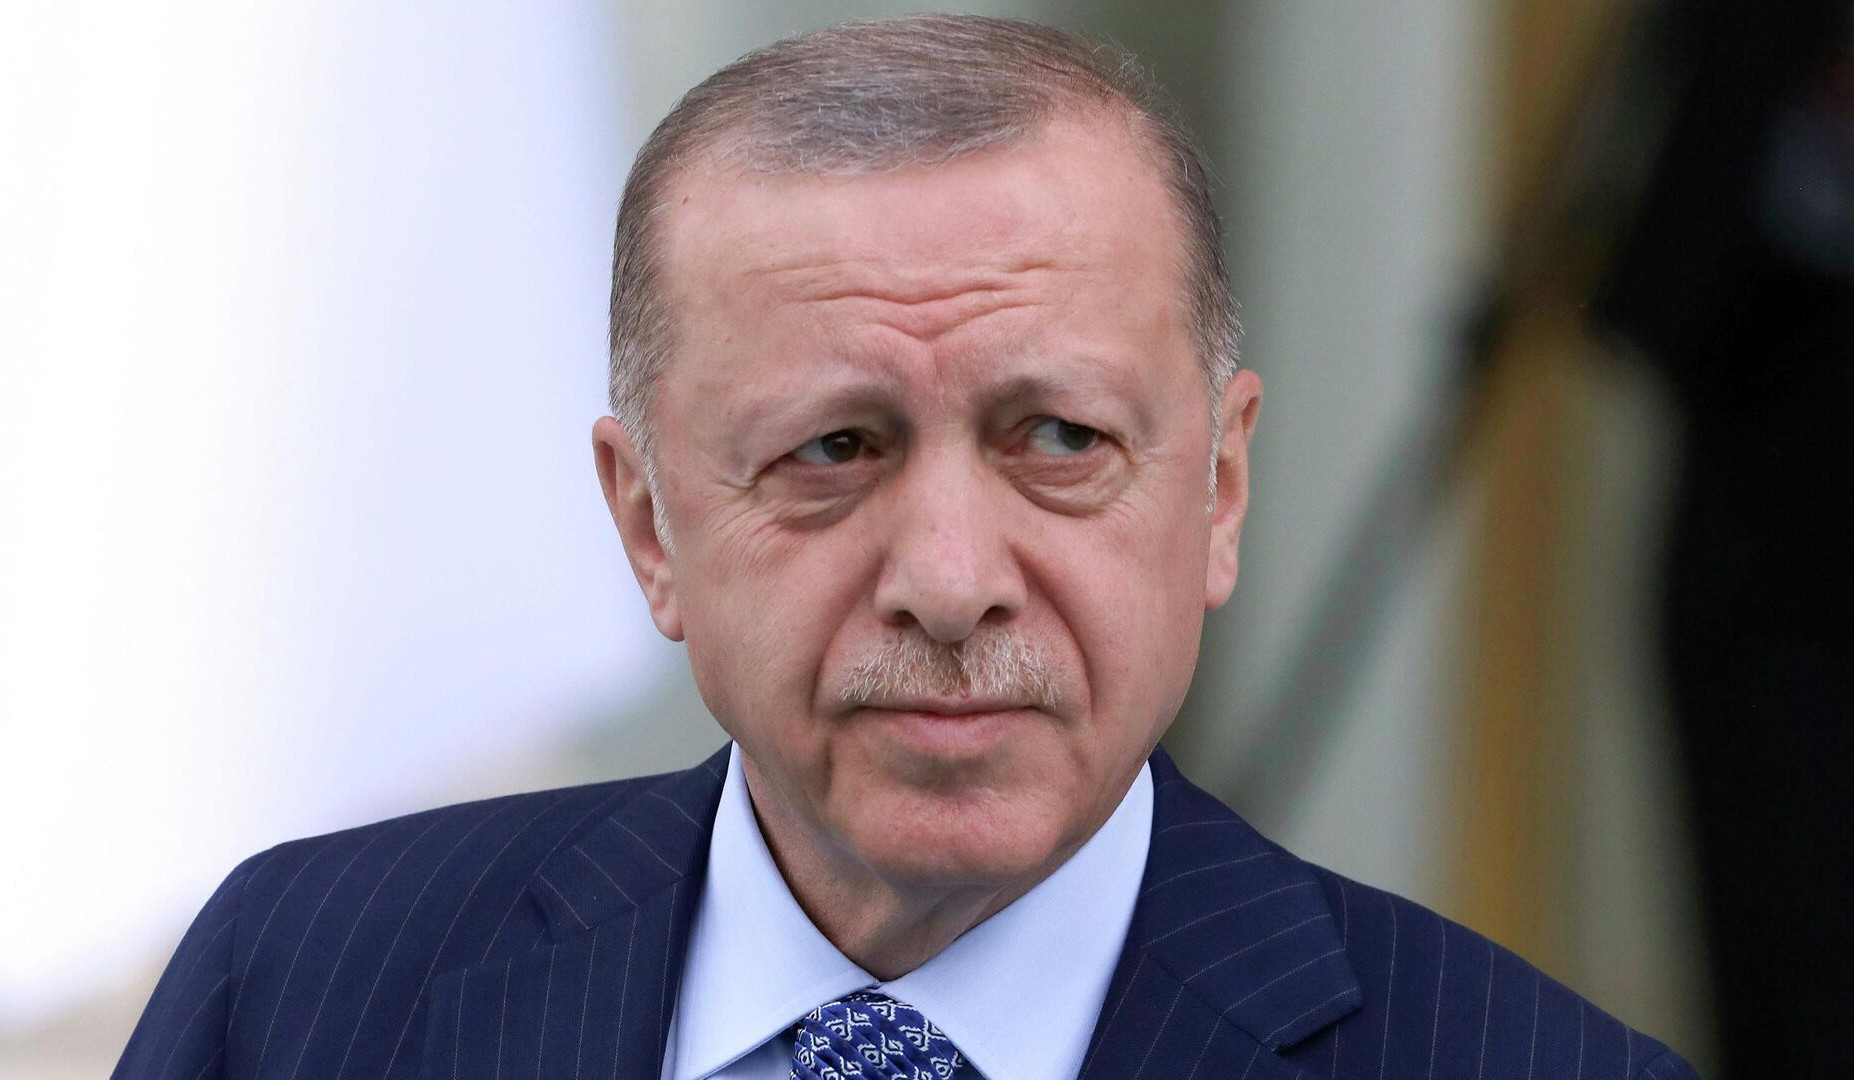 Erdogan compared Netanyahu to Hitler, Mussolini and Stalin